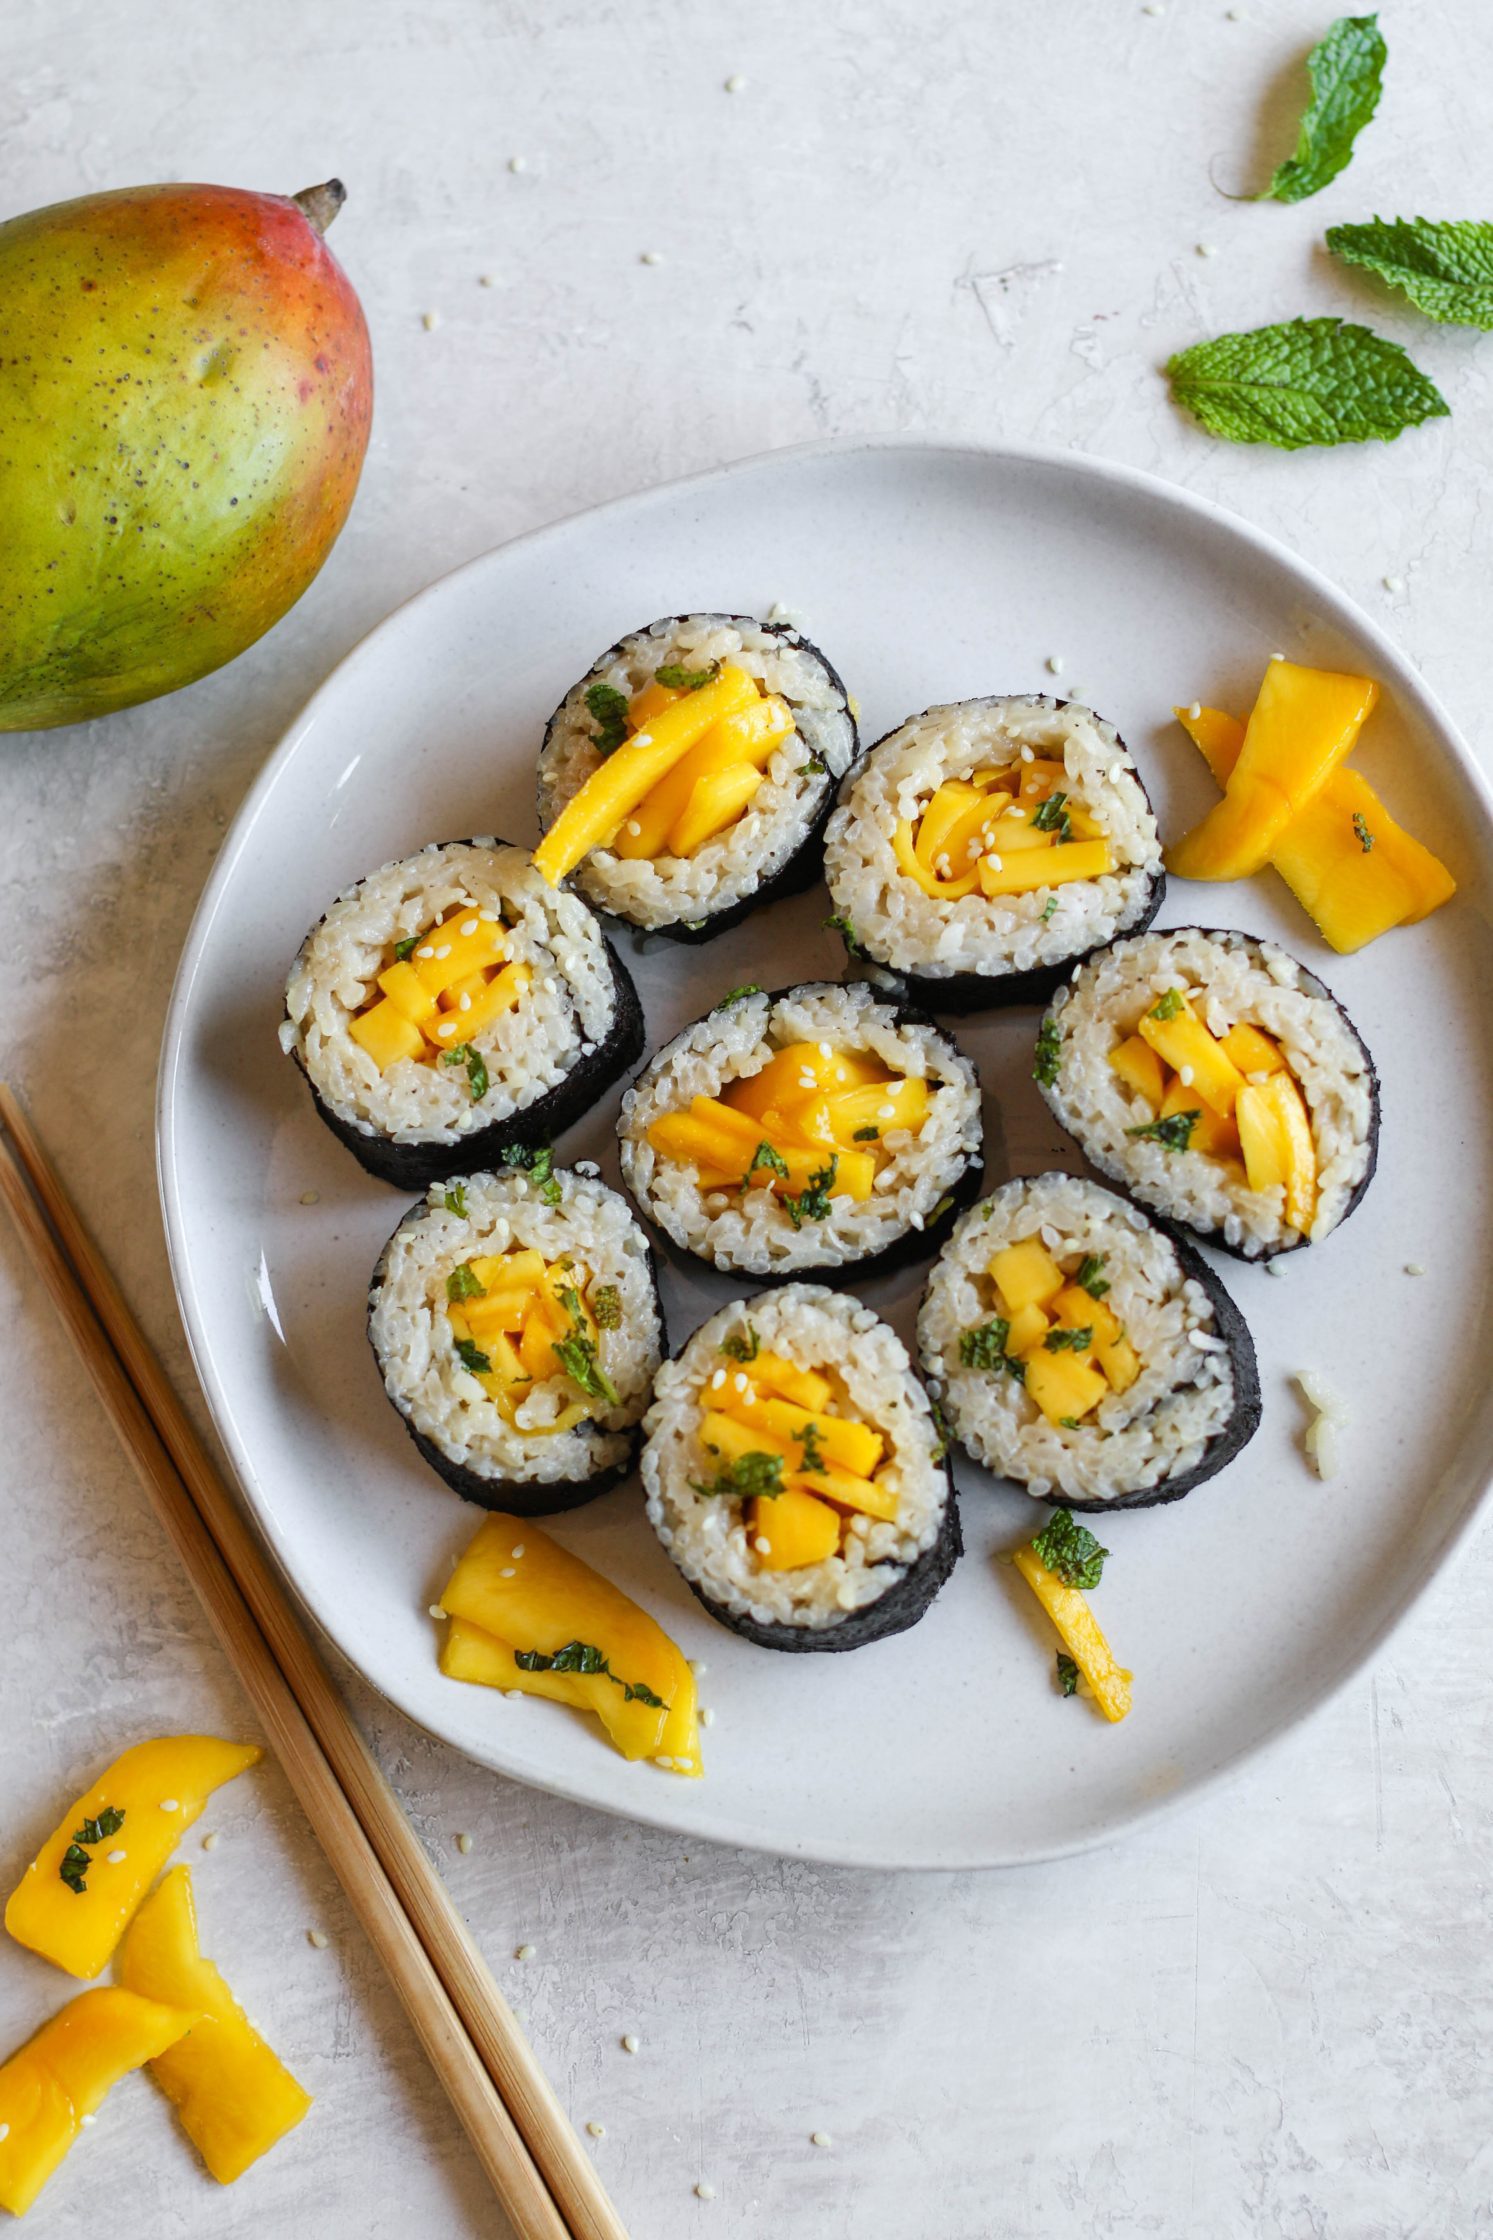 https://b1319836.smushcdn.com/1319836/wp-content/uploads/2020/06/Mango-Sticky-Rice-Dessert-Sushi-23-scaled.jpg?lossy=1&strip=1&webp=1